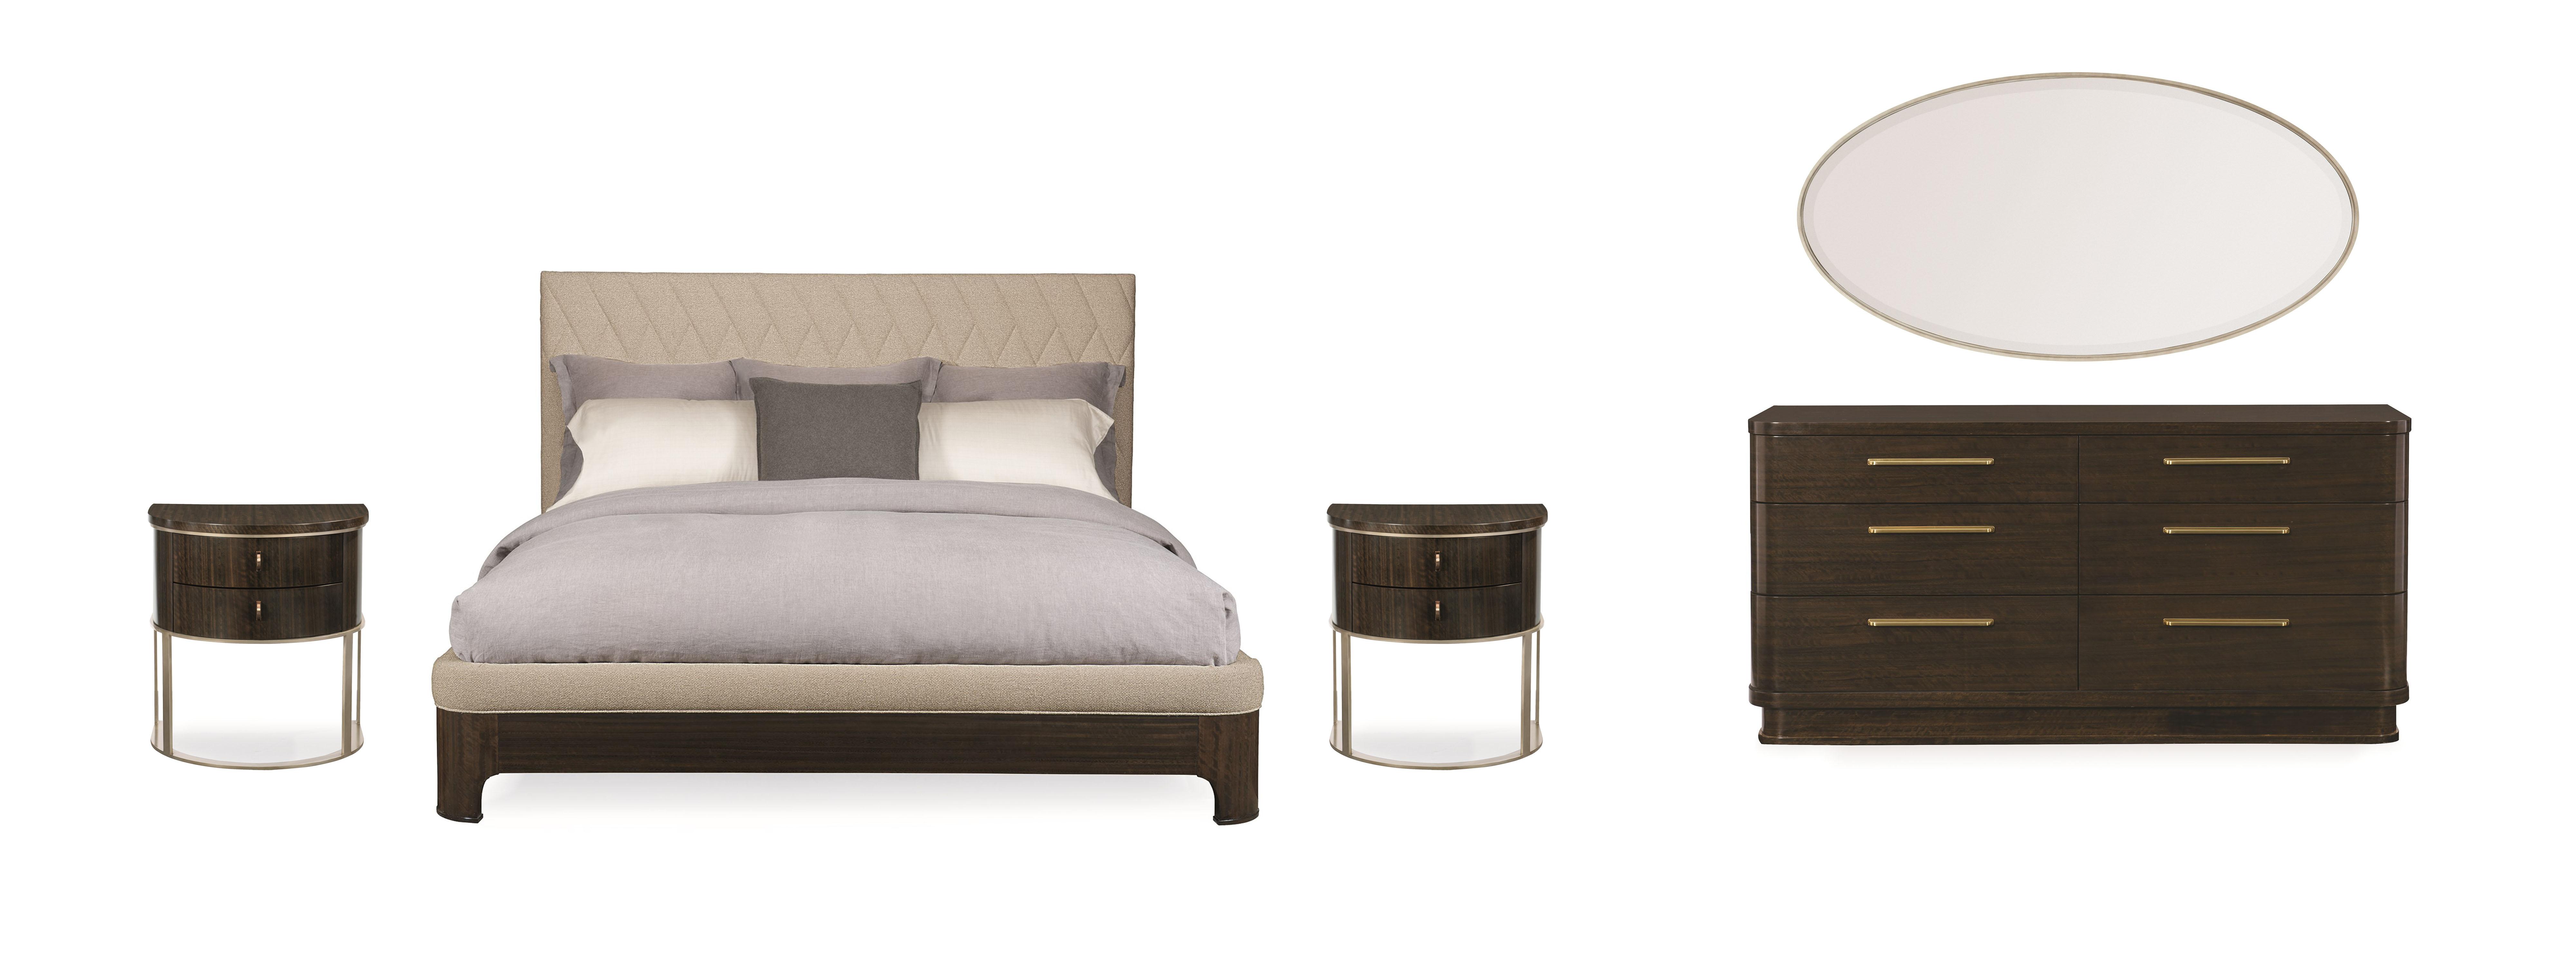 Contemporary Platform Bedroom Set MODERNE BED / MODERNE NIGHTSTAND M023-417-101-Set-5 in Neutral Fabric